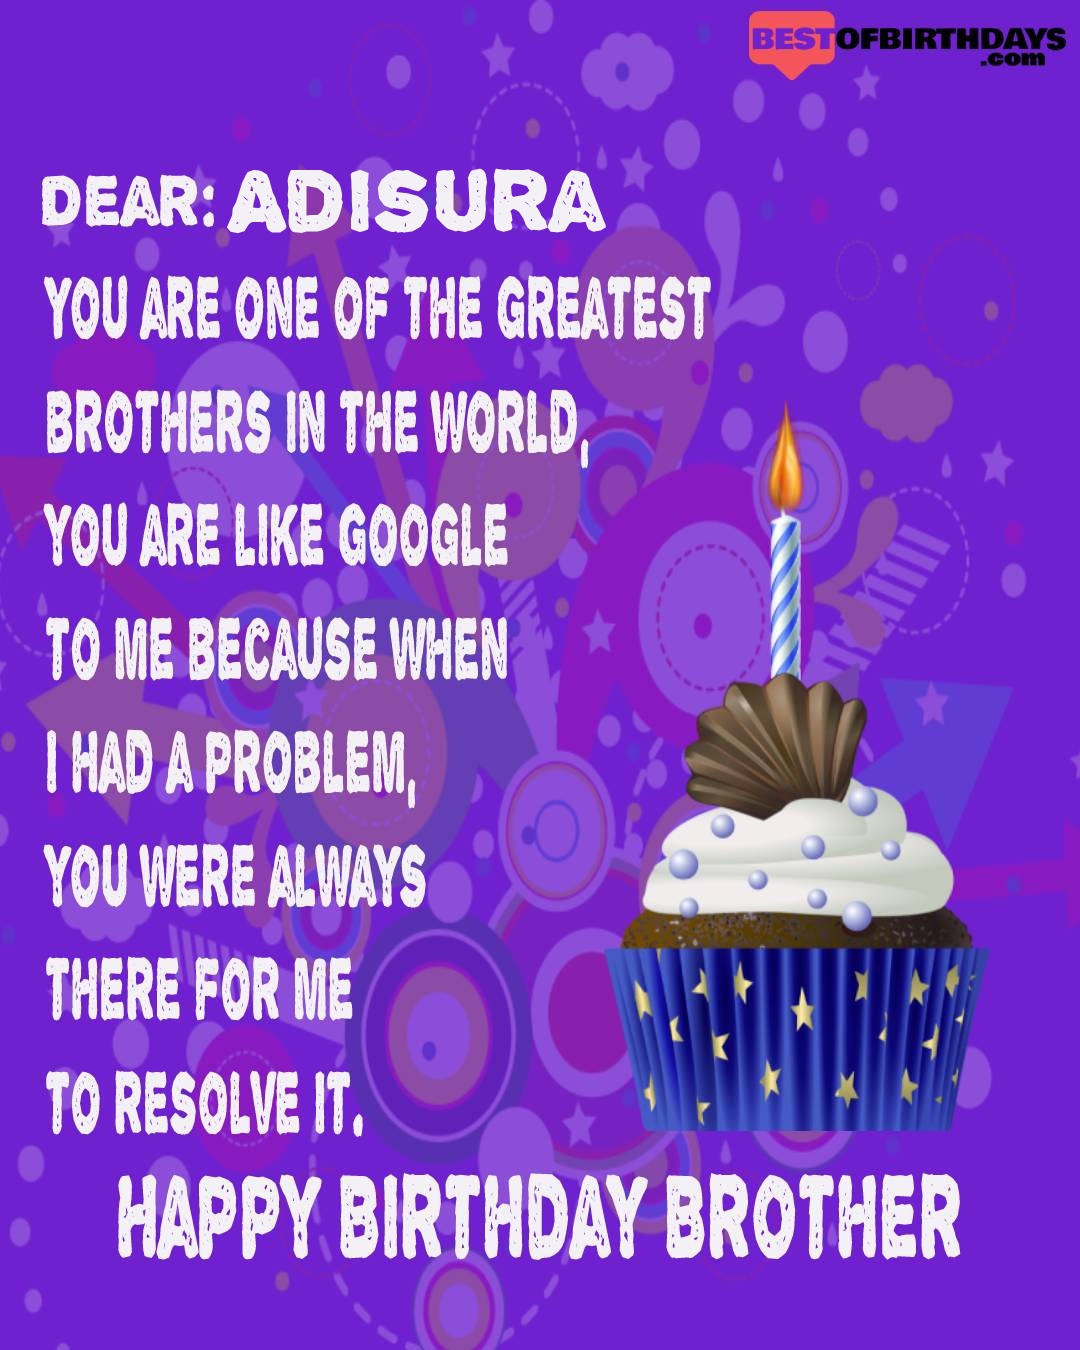 Happy birthday adisura bhai brother bro